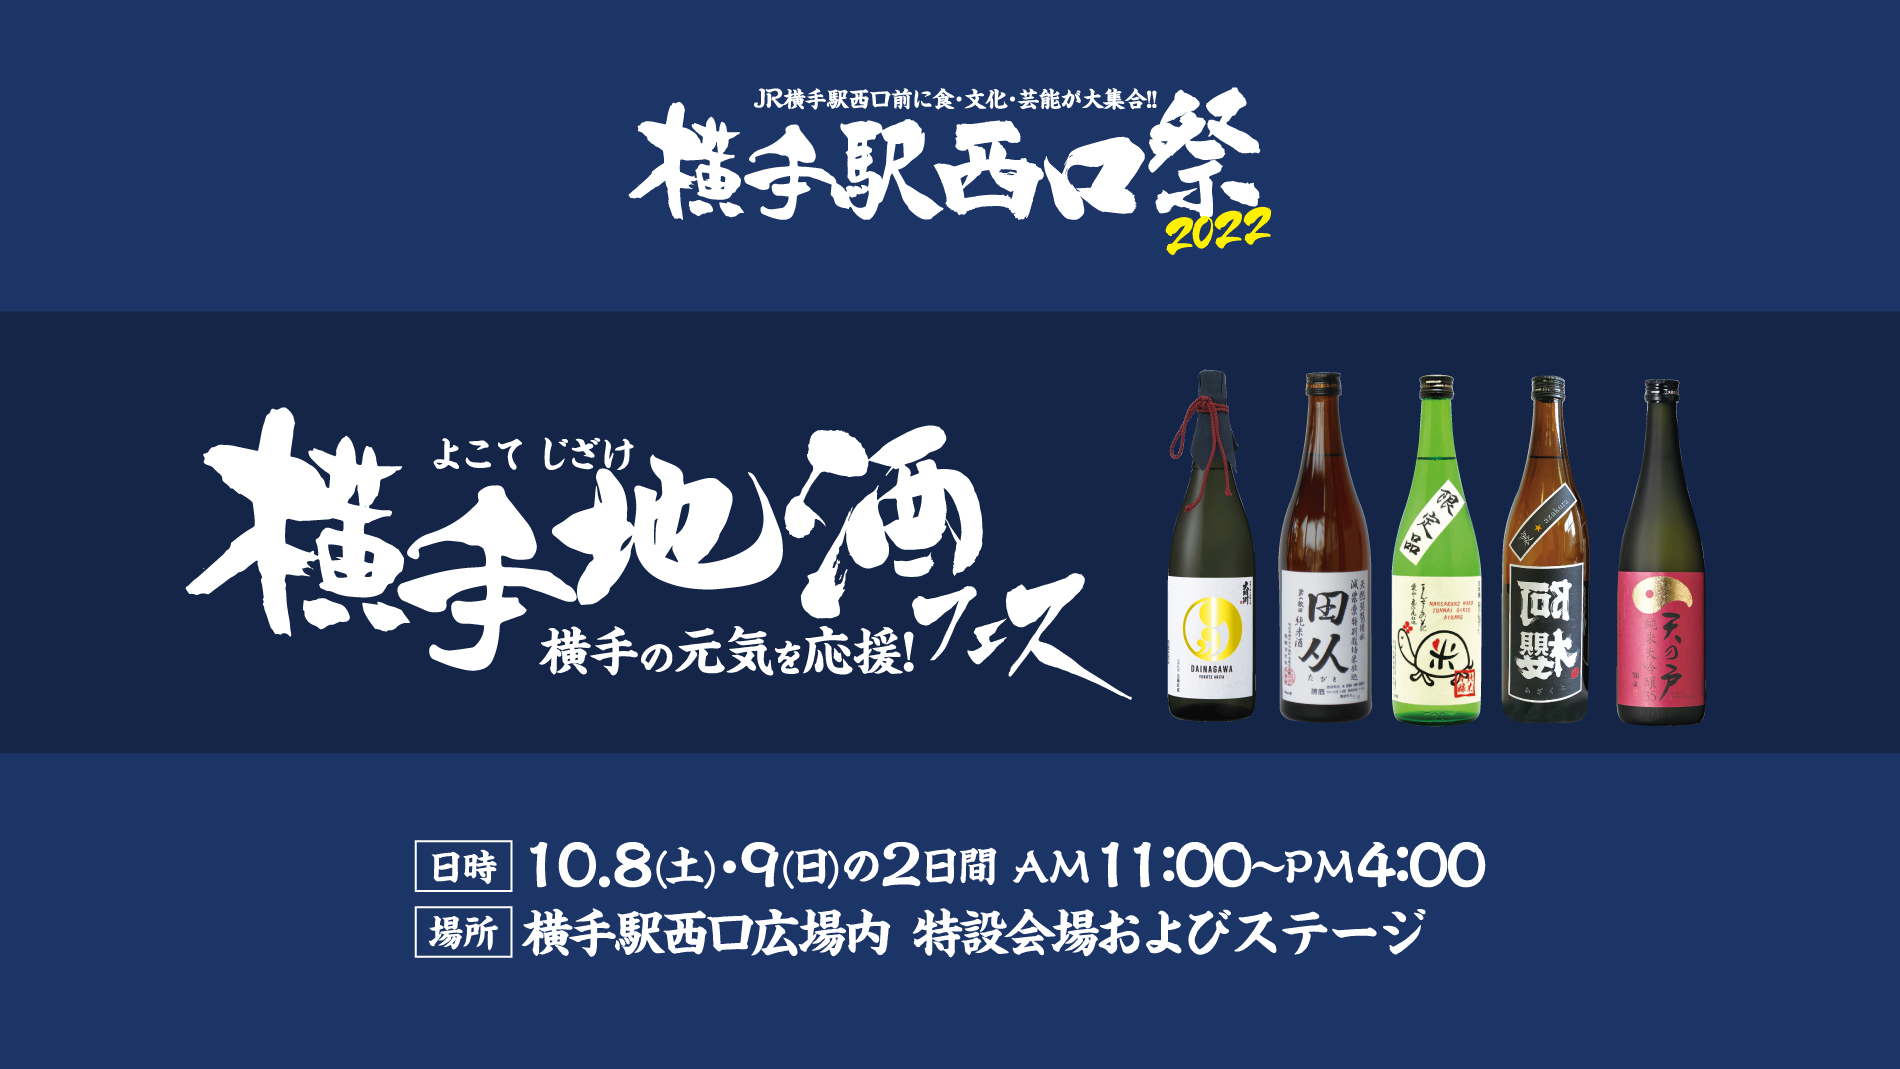 横手駅西口祭2022 横手地酒フェス